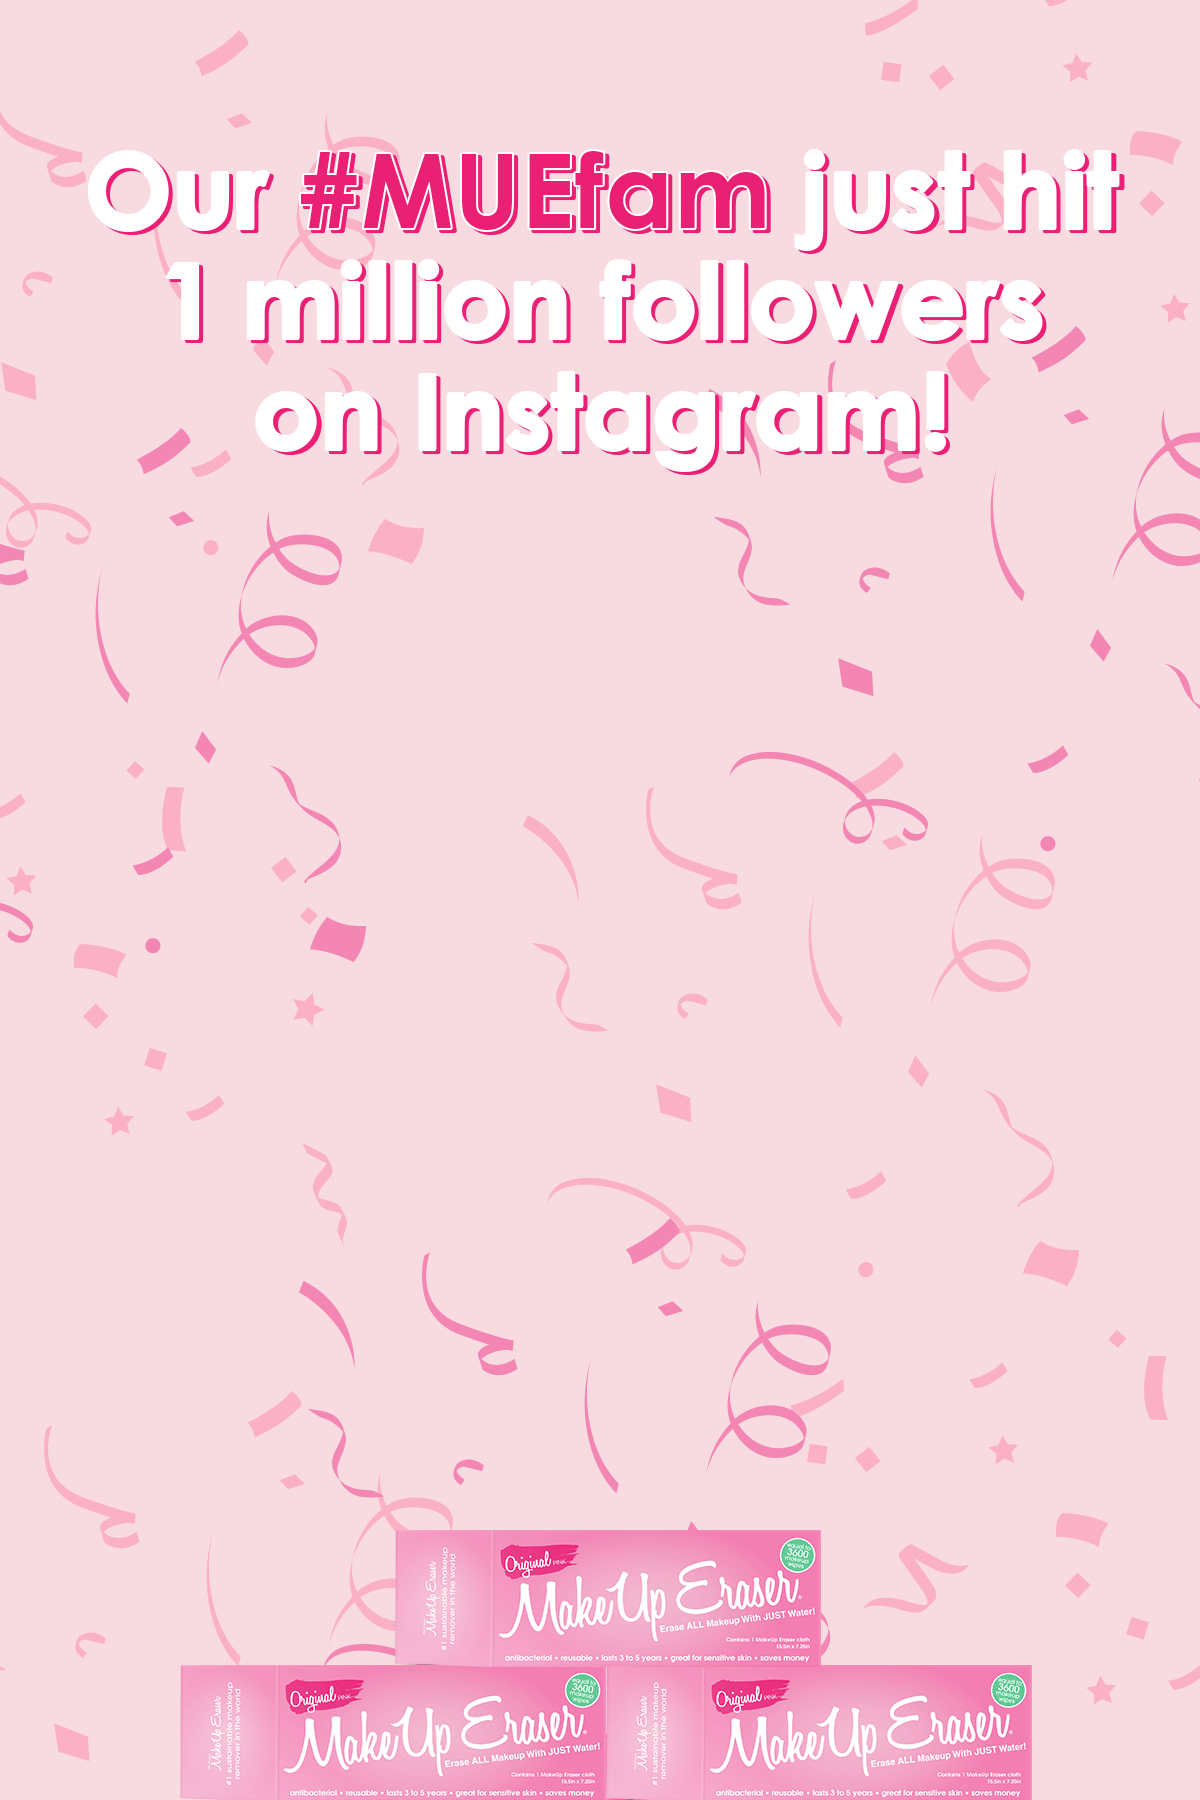 1 million followers on Instagram!